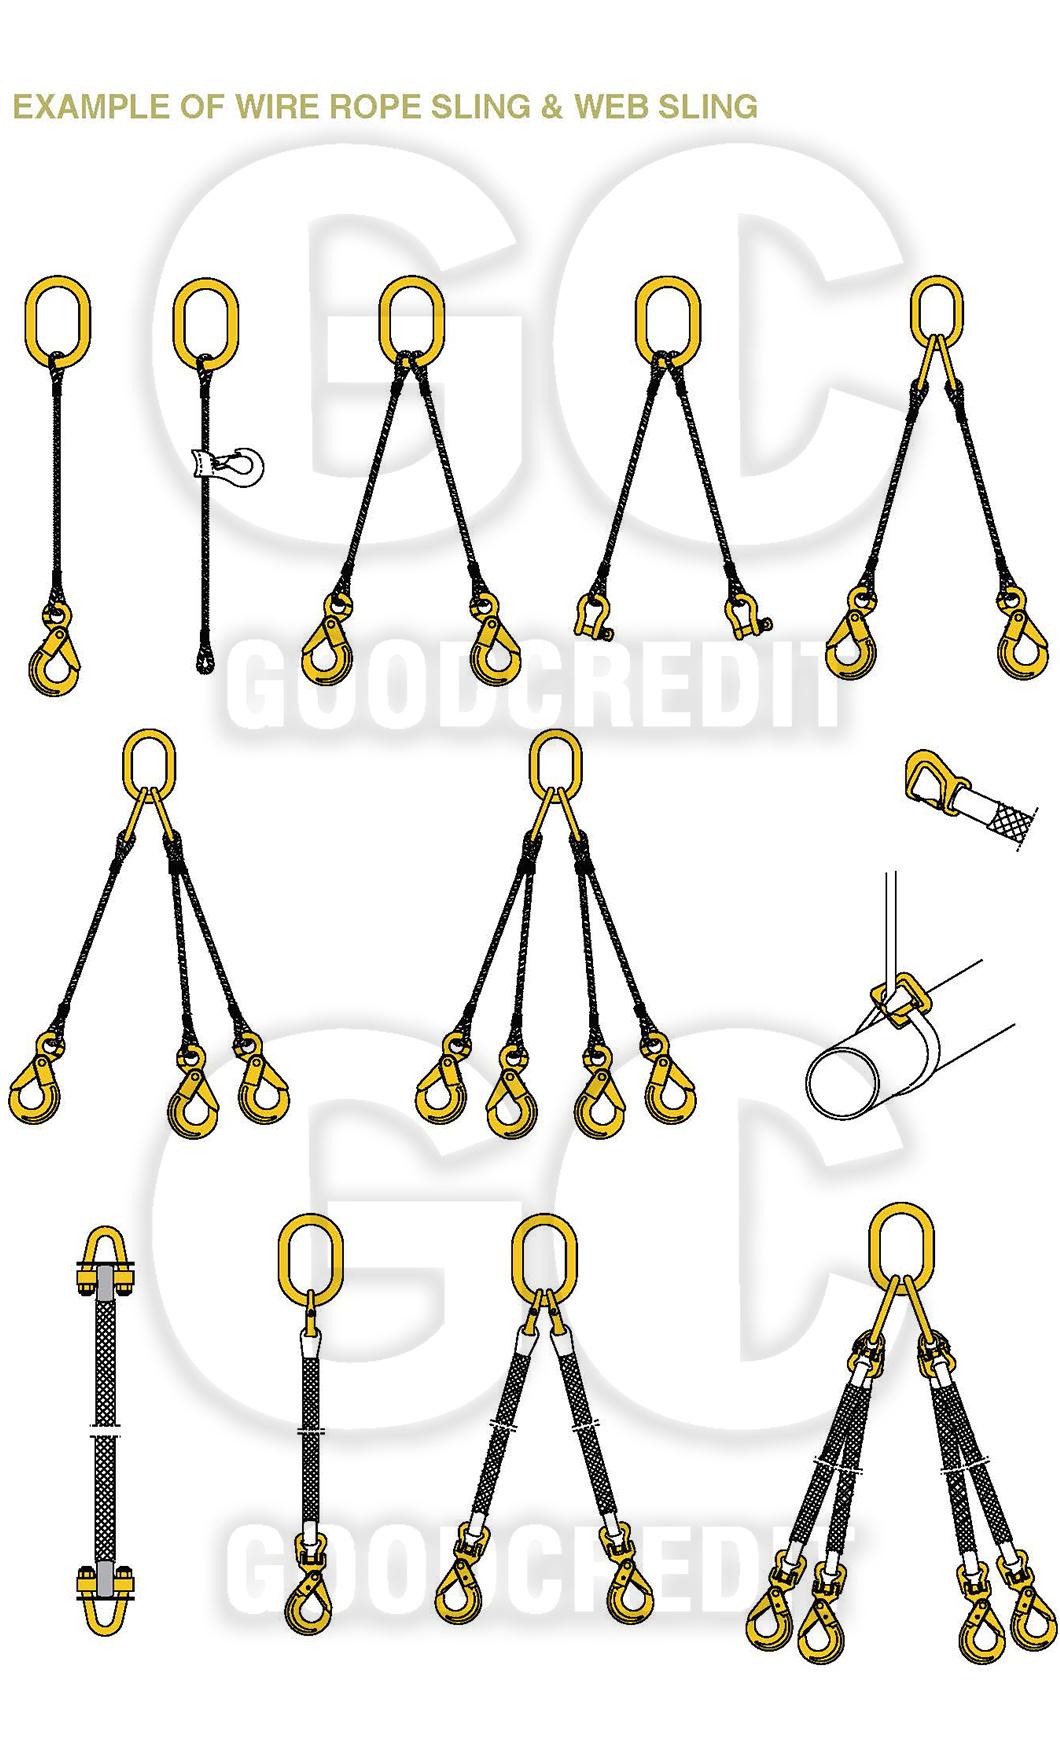 DIN 763 / 764 / 766 / 5685 Standard Galvanized Long Short Link Chain